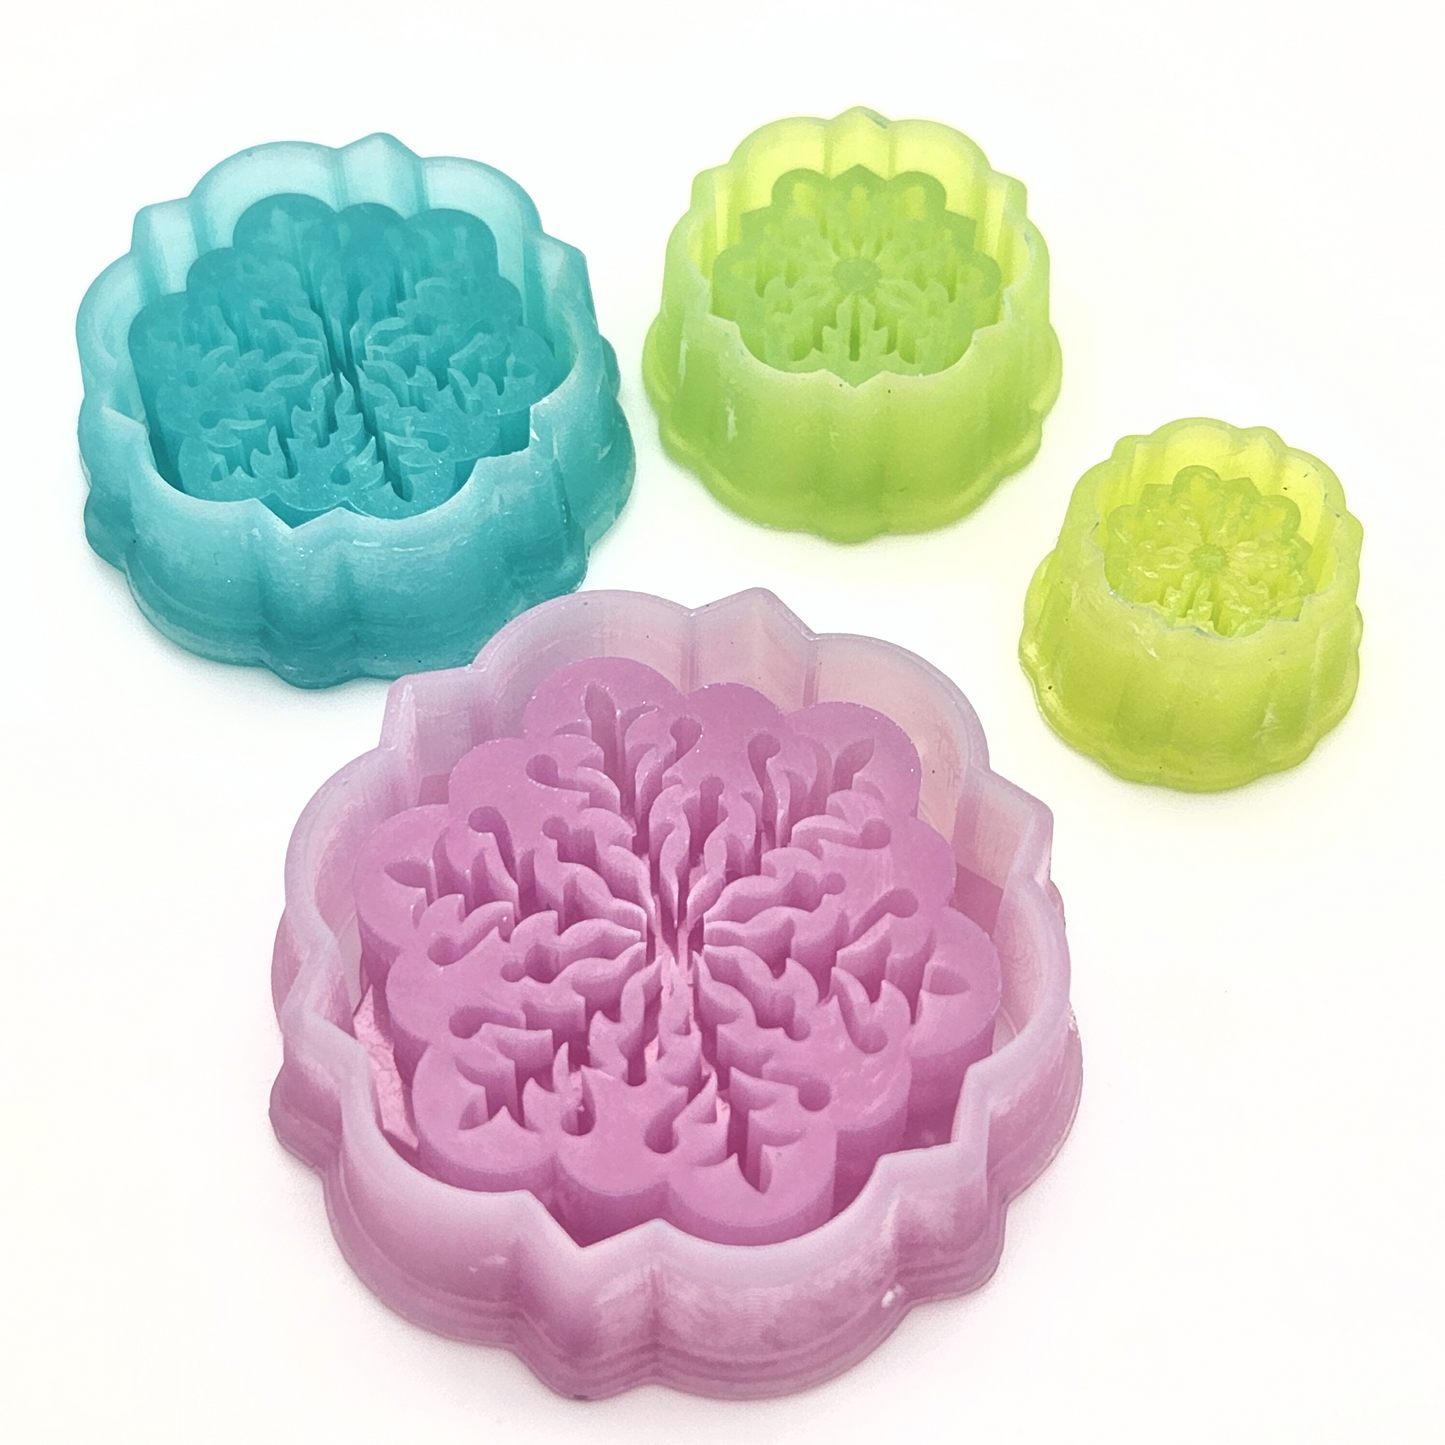 3D Printed Resin Snowflake Tile Design Sharp Edge Polymer Clay Cutter